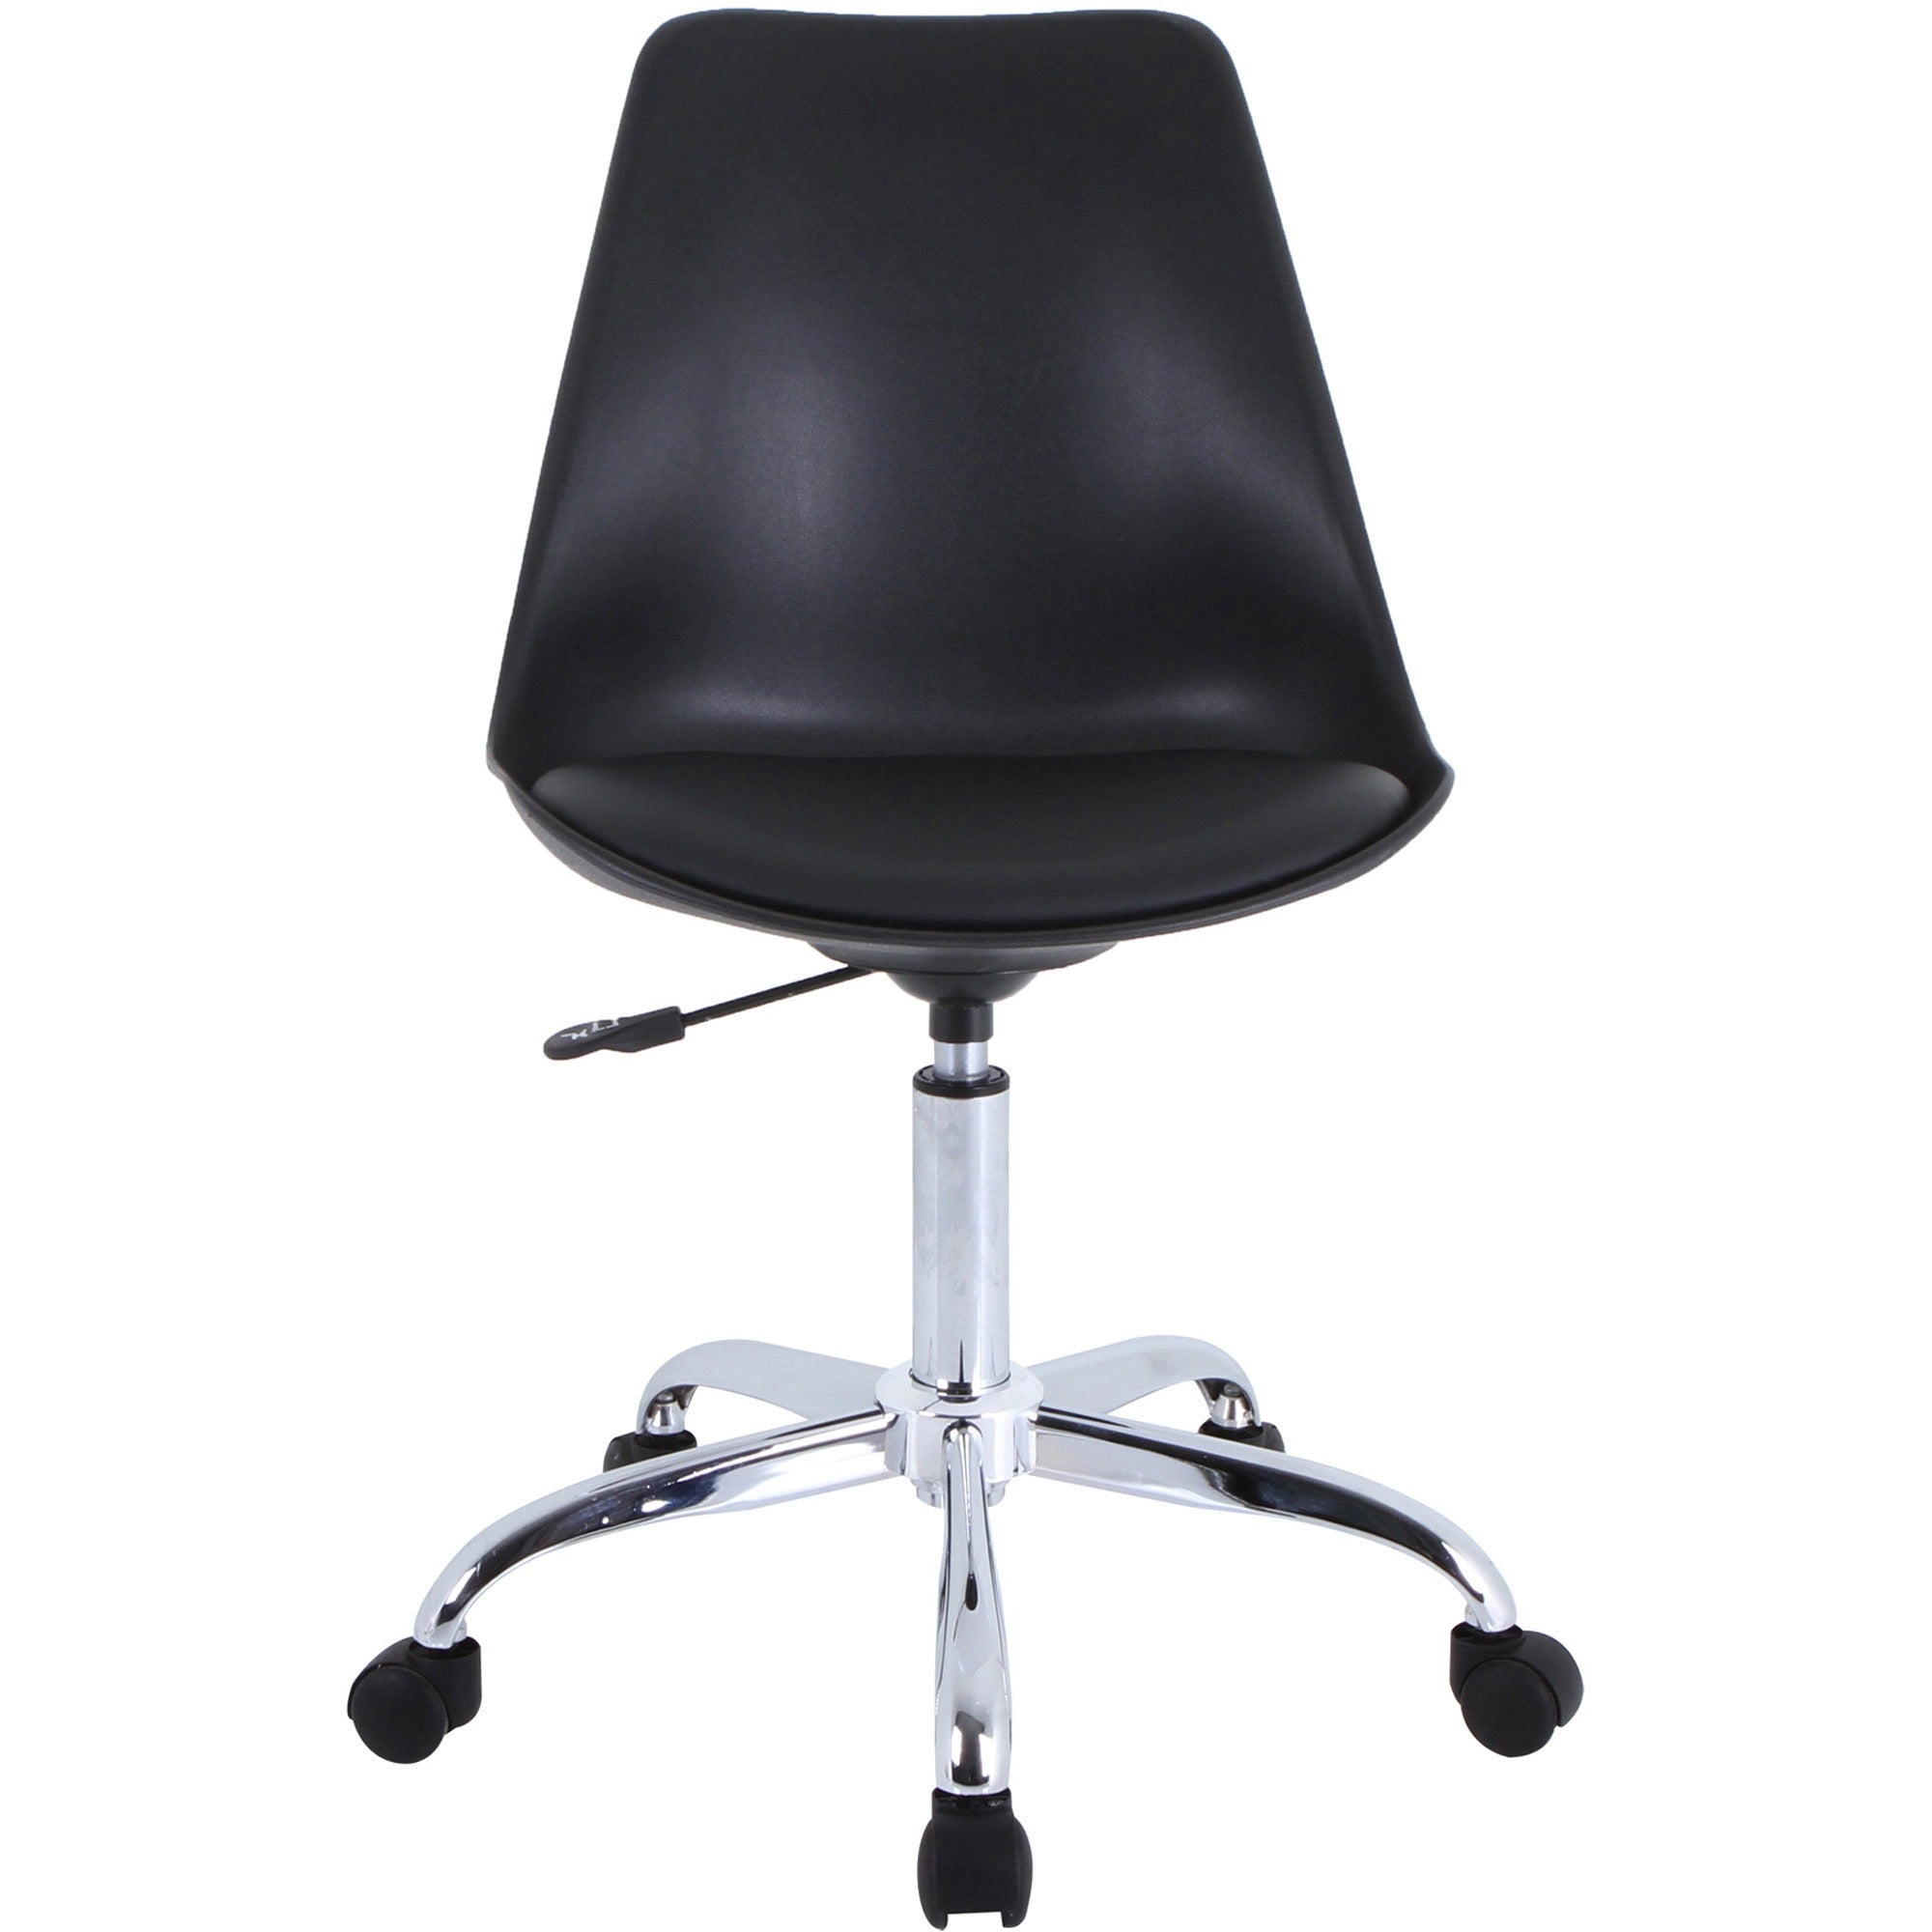 nusparc-padded-seat-poly-task-chair-poly-seat-high-back-5-star-base-black-polyvinyl-chloride-pvc-plastic-polyurethane-1-each_nprch303cnbk - 3